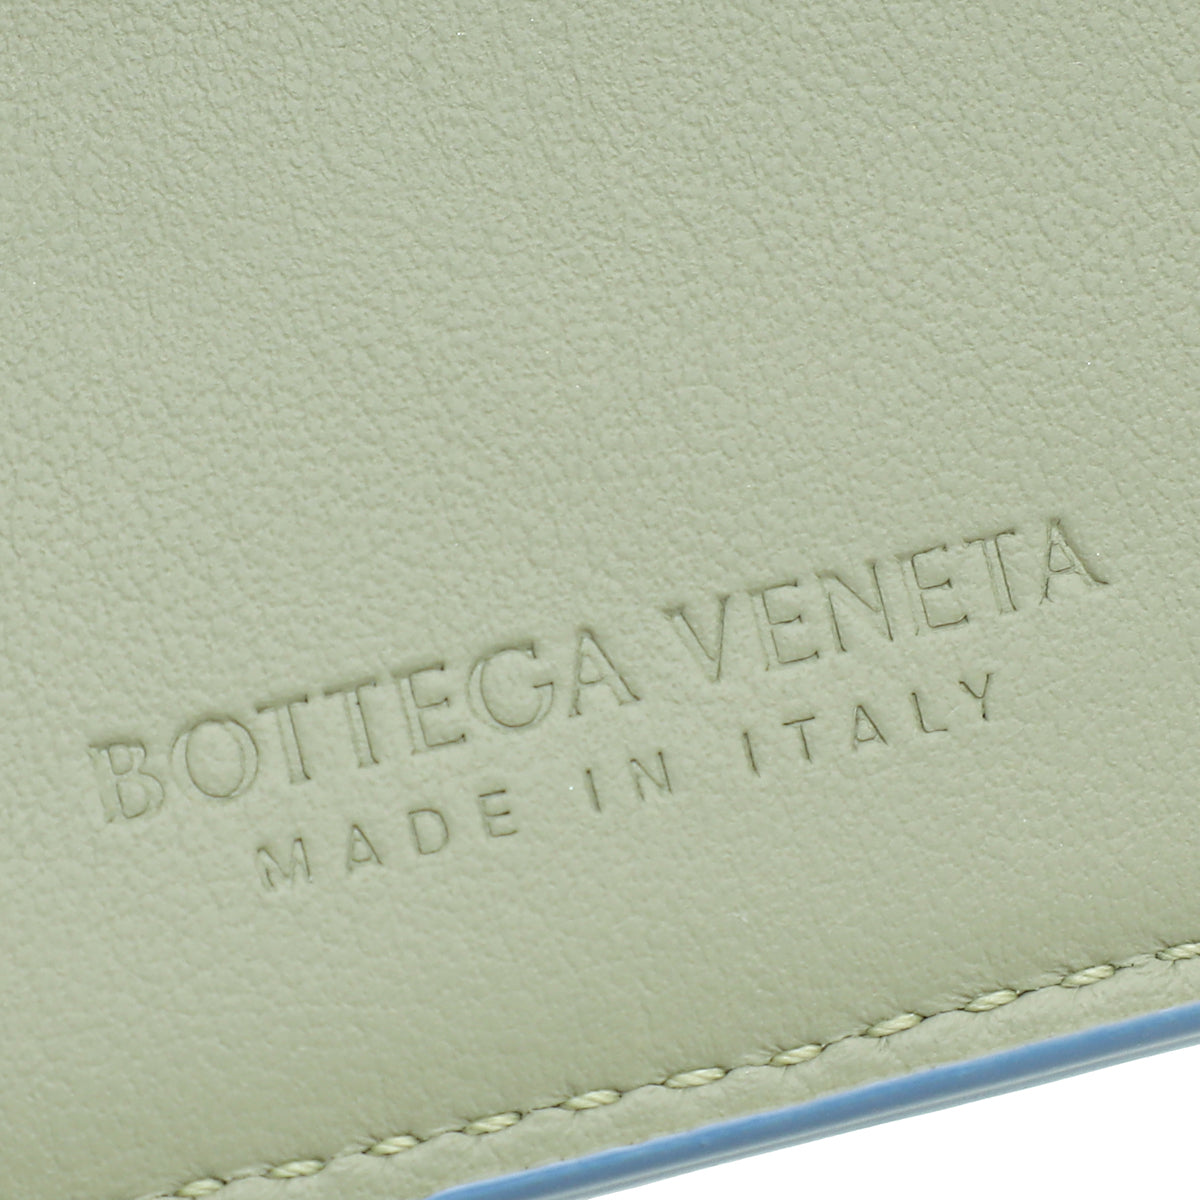 Bottega Veneta Blue Intrecciato Bi-Fold Wallet